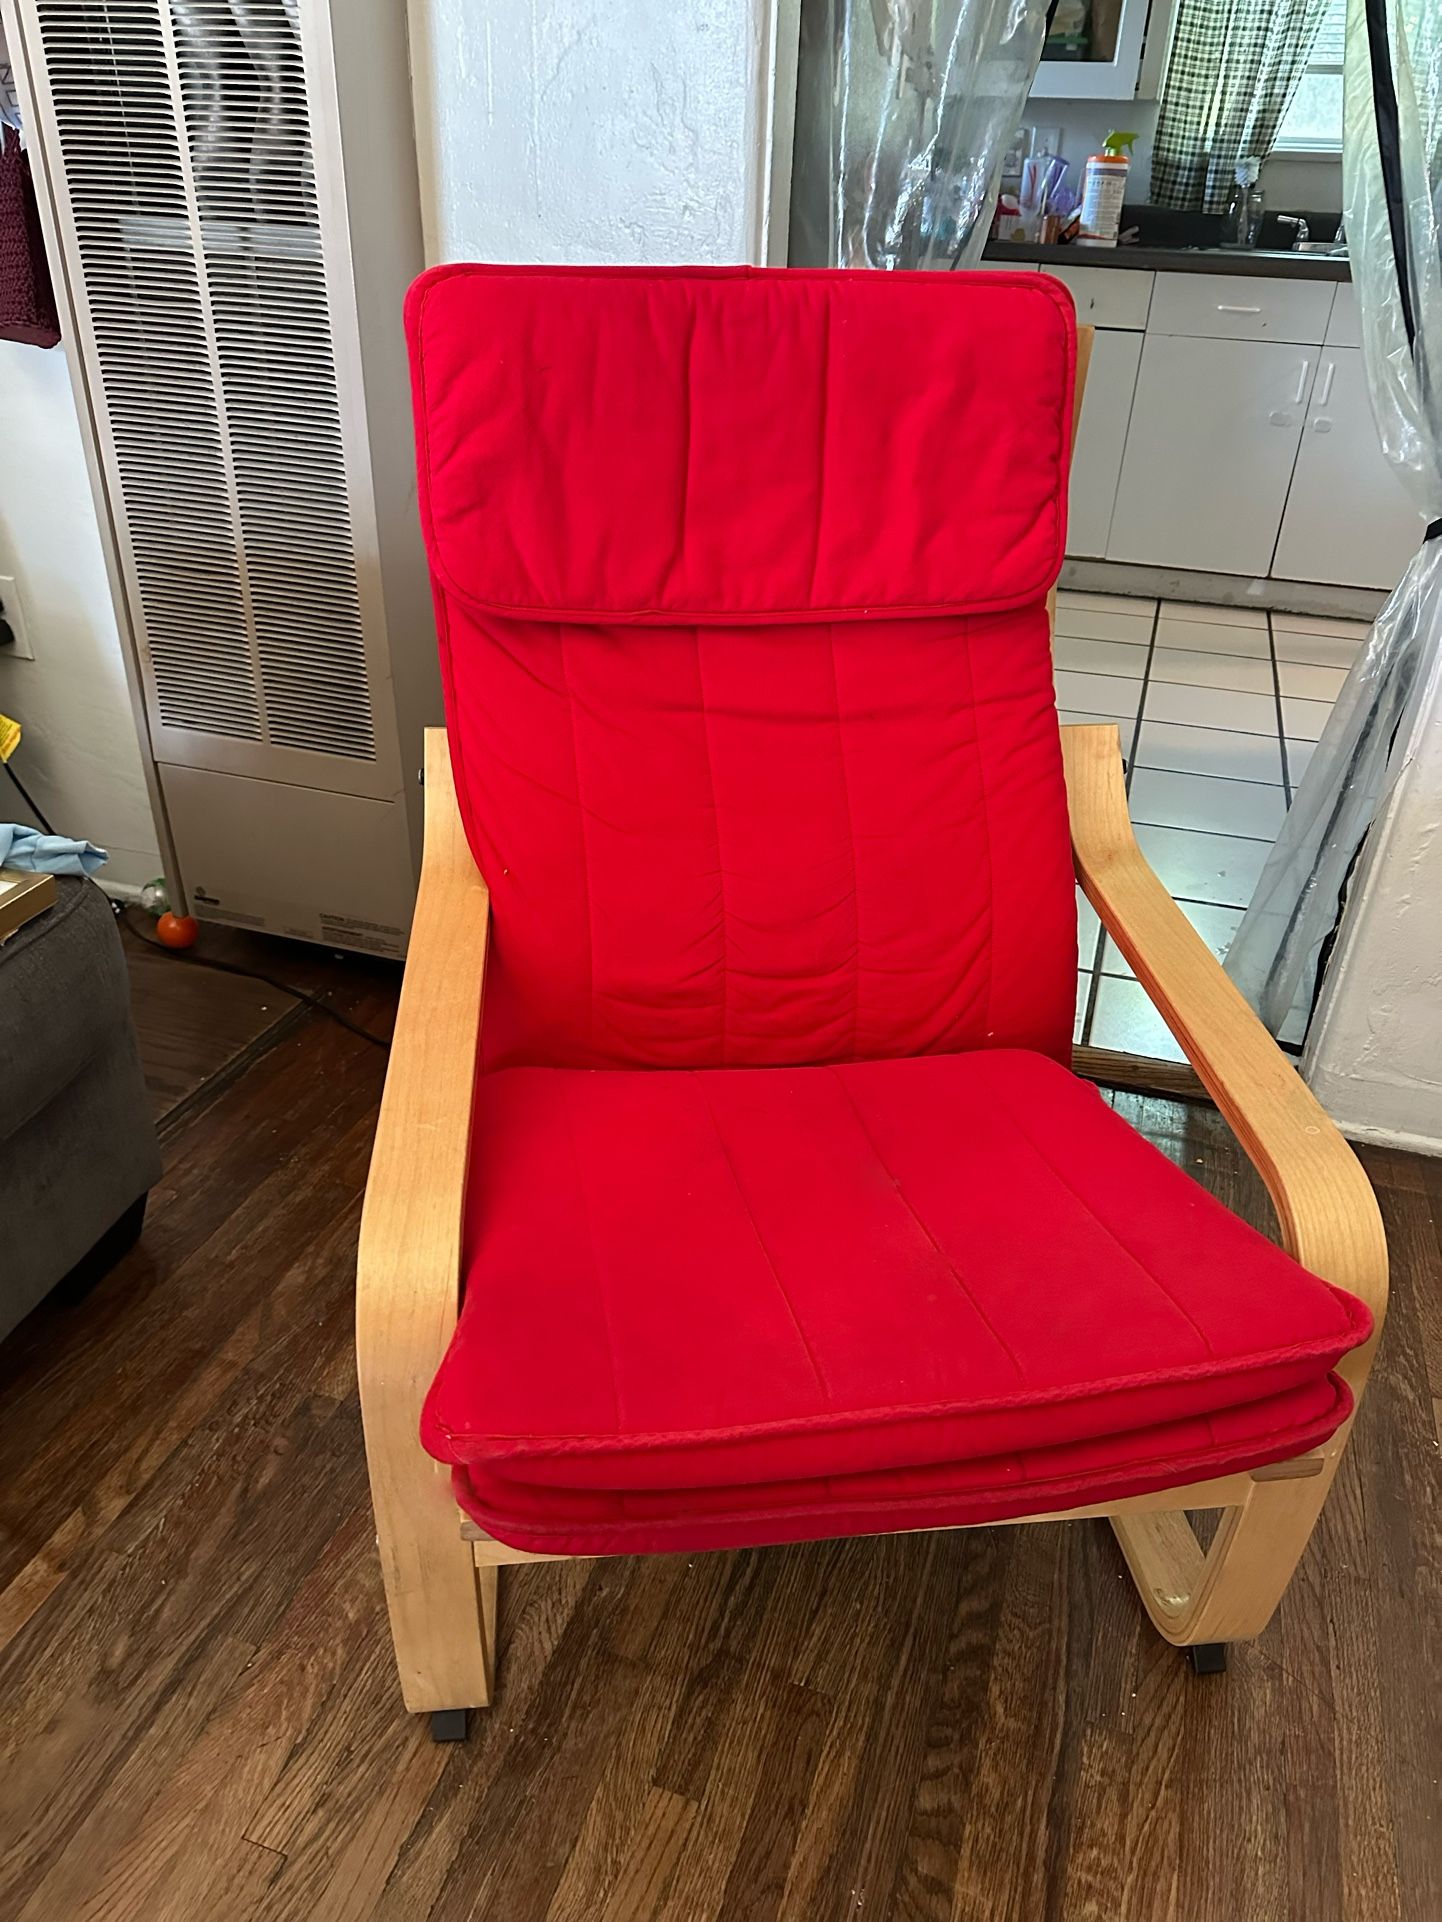 IKEA rocking chair